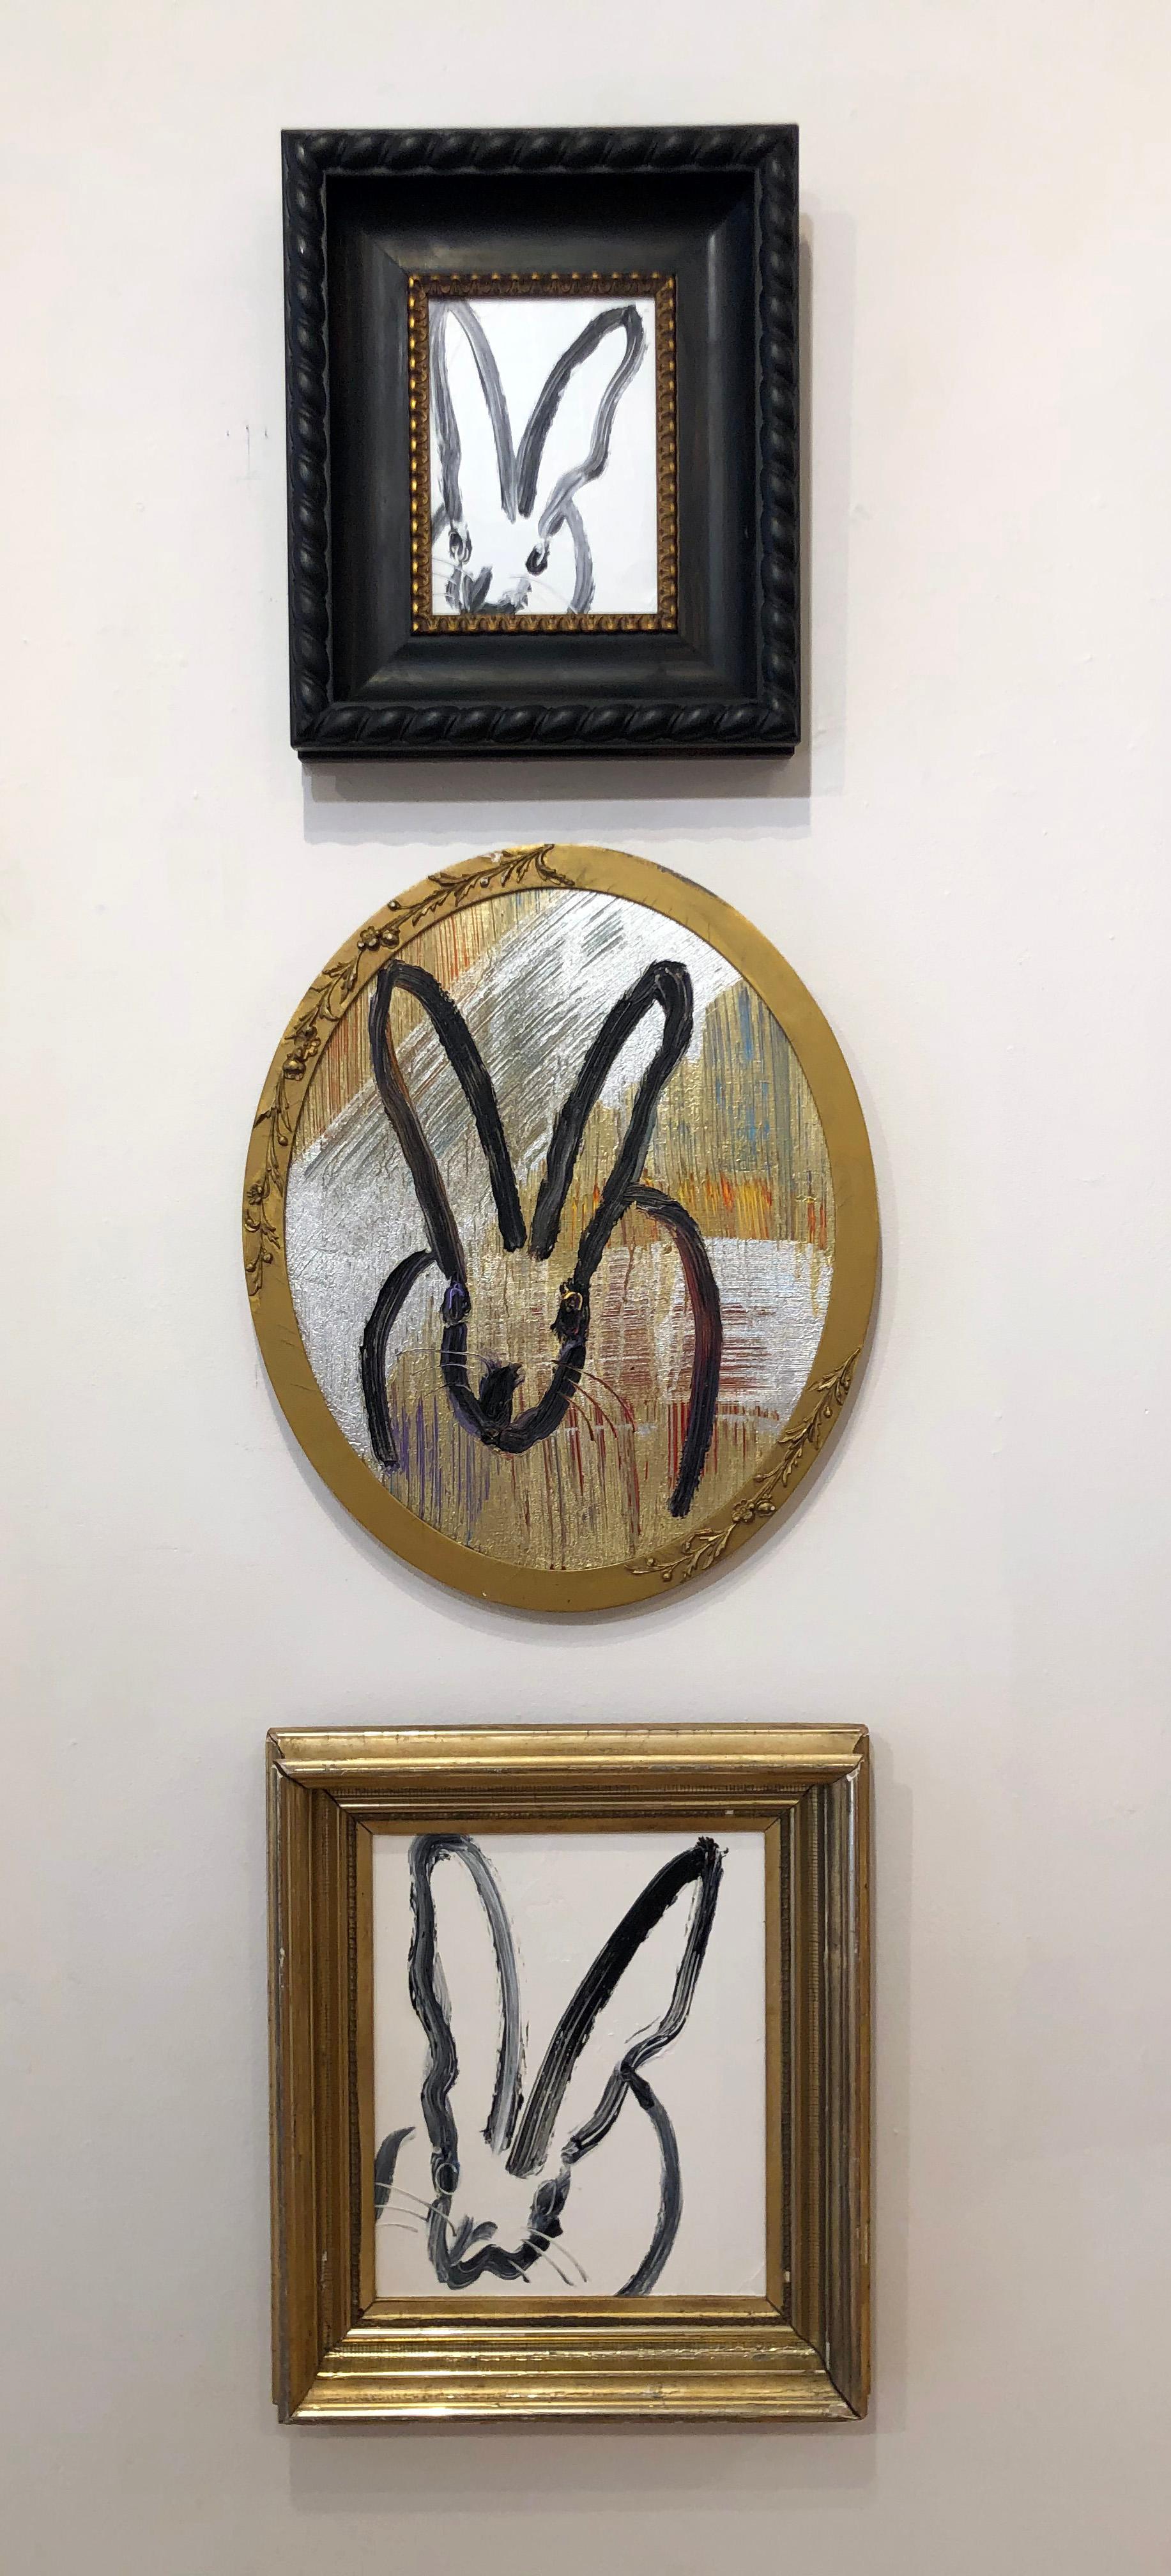 Artist:  Slonem, Hunt
Title:  Oval Rainbow Bunny
Series:  Bunnies
Date:  2019
Medium:  Oil on panel
Unframed Dimensions:  17